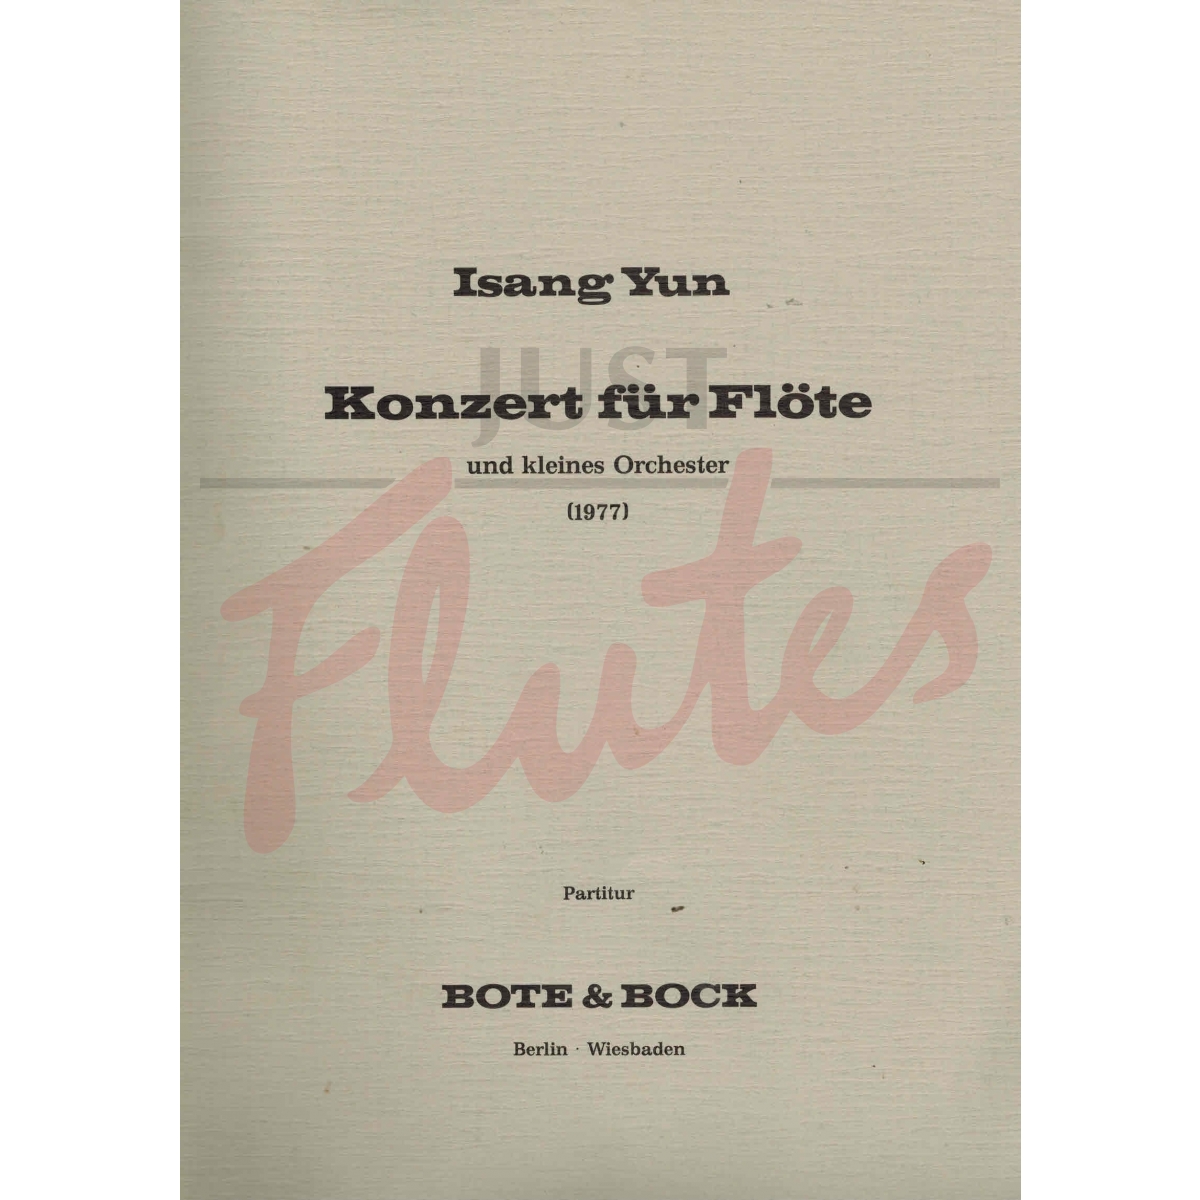 Concerto for Flute (1977)